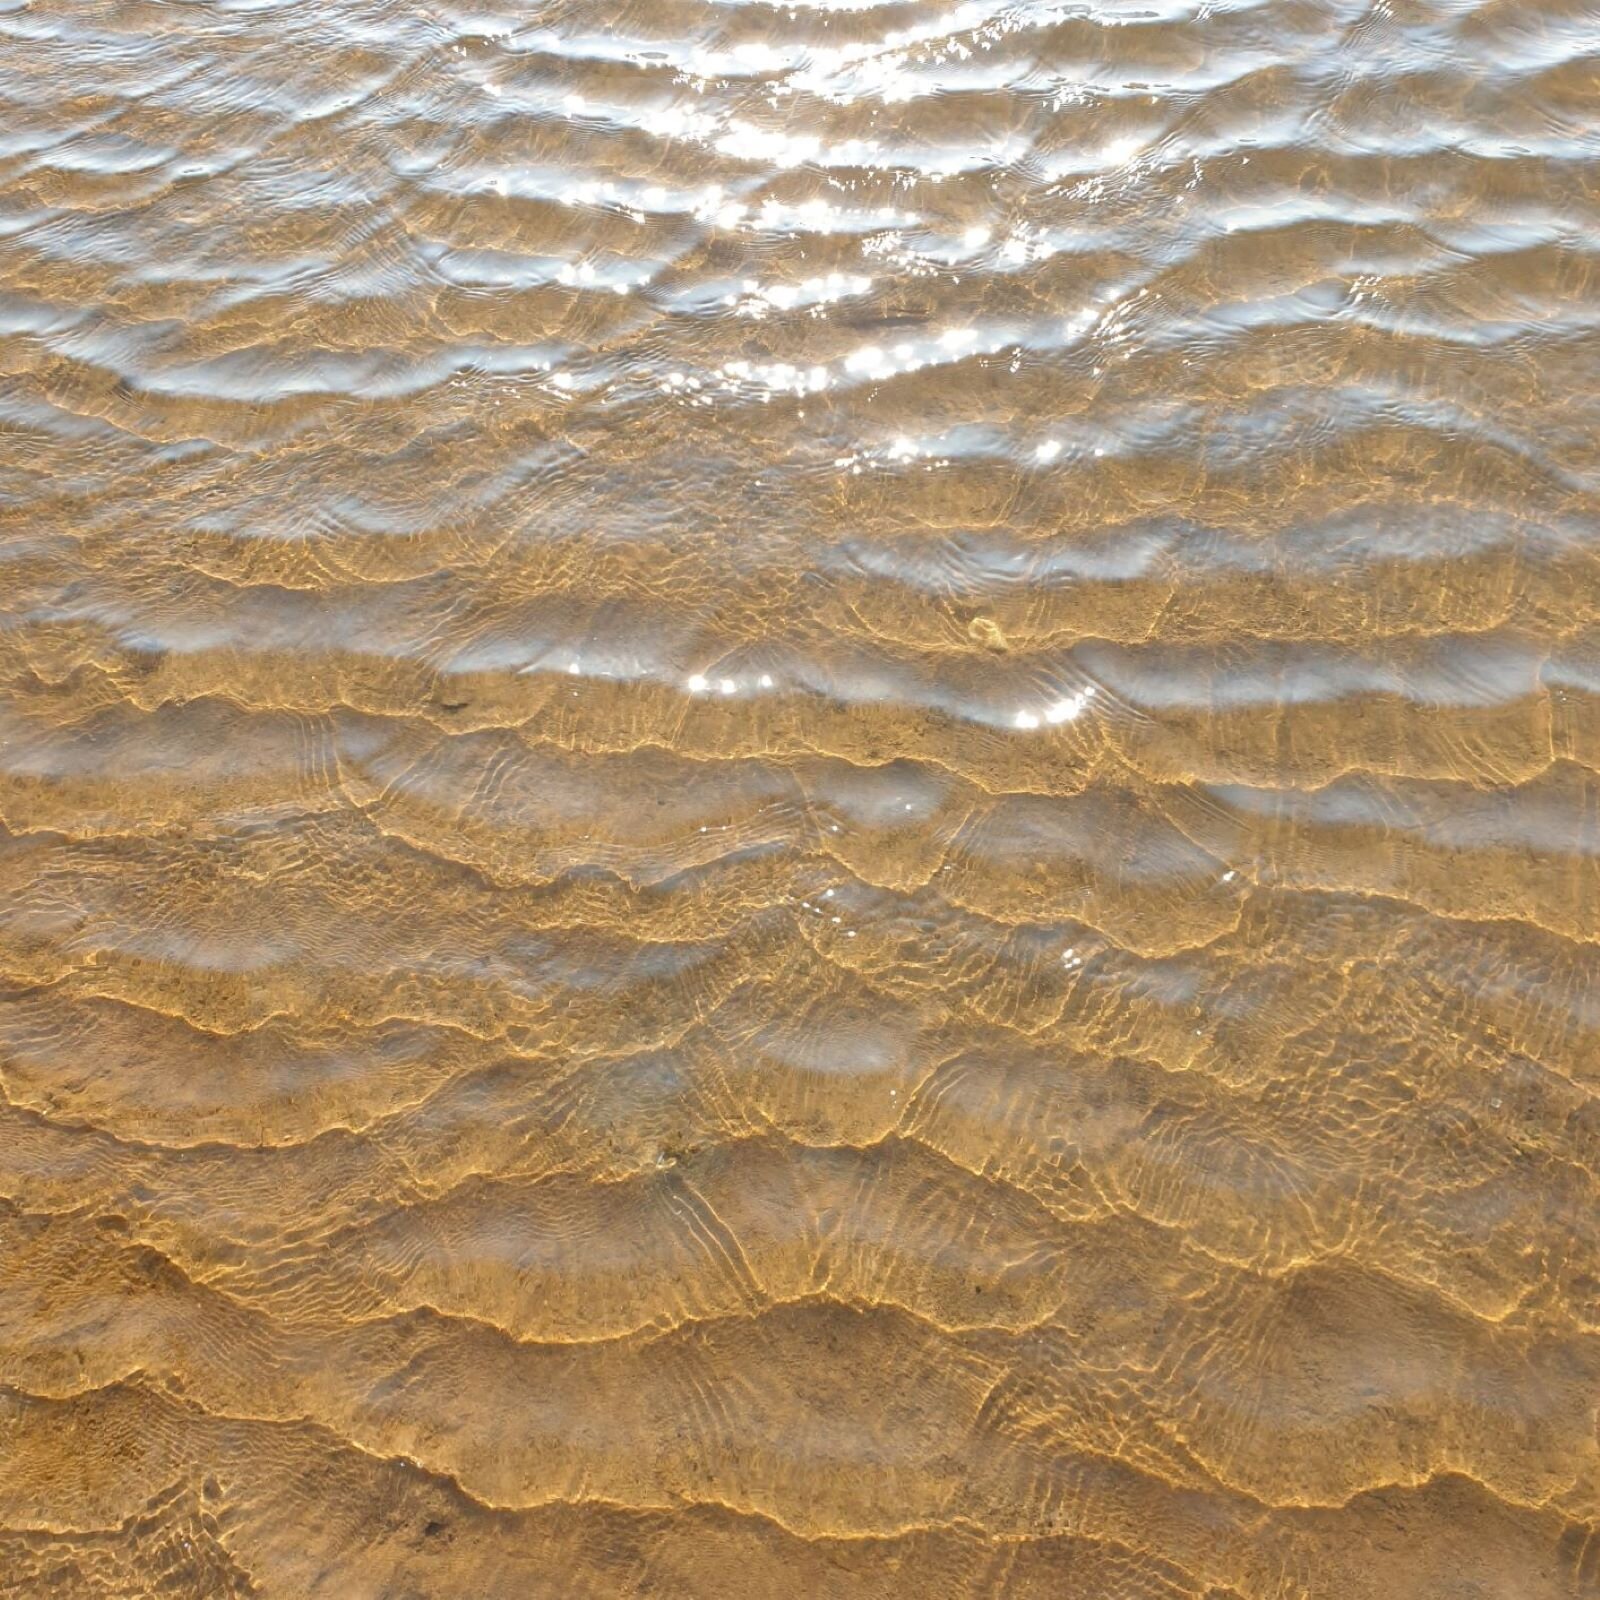 Rippling sea over a sandy beach sun glistens on the water